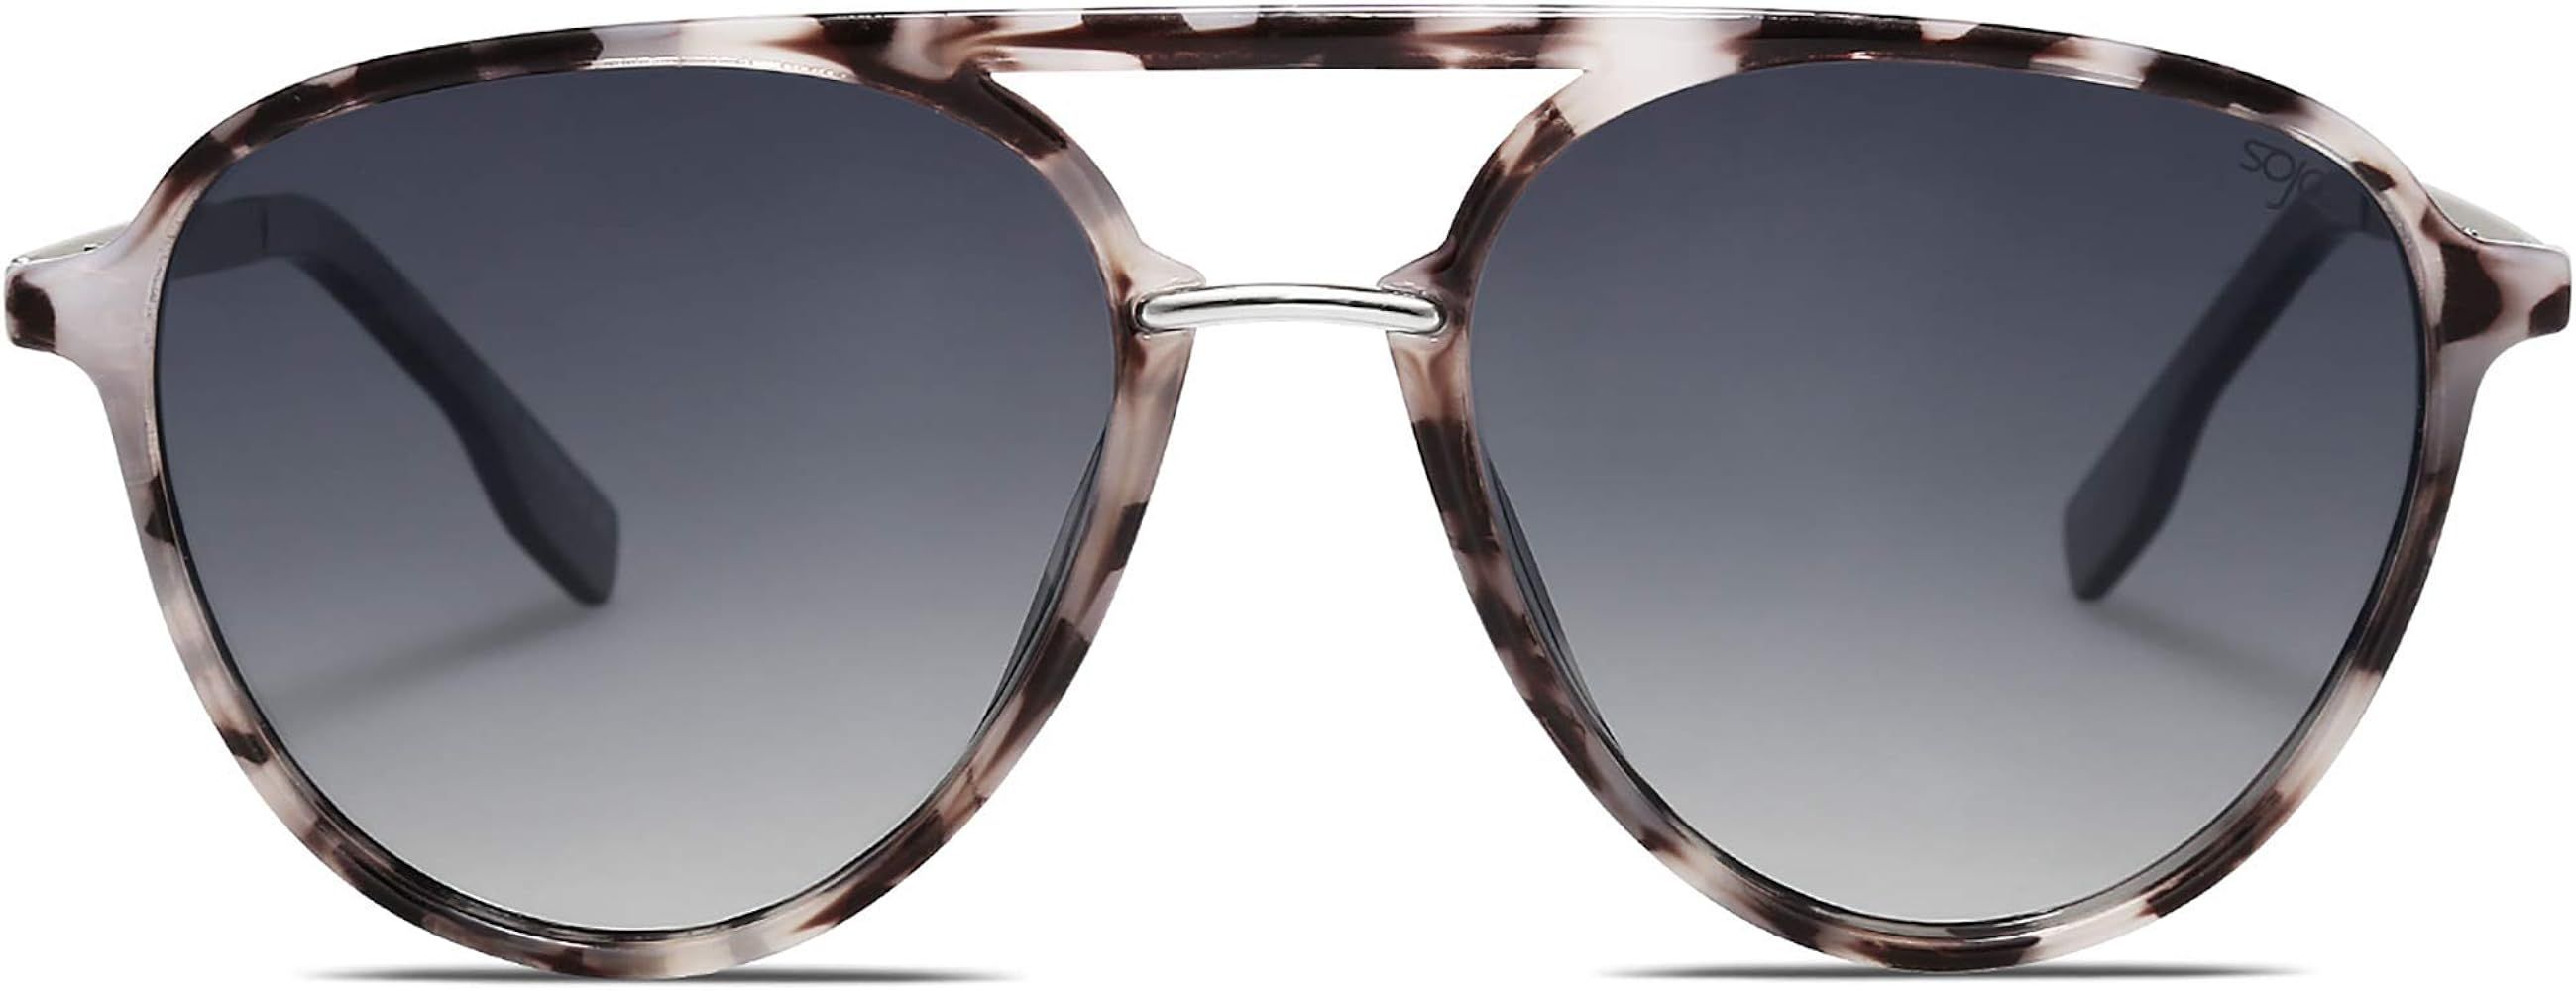 SOJOS Retro Aviator Polarized Sunglasses for Women Men Double Bridge Ladies Shades | Amazon (US)